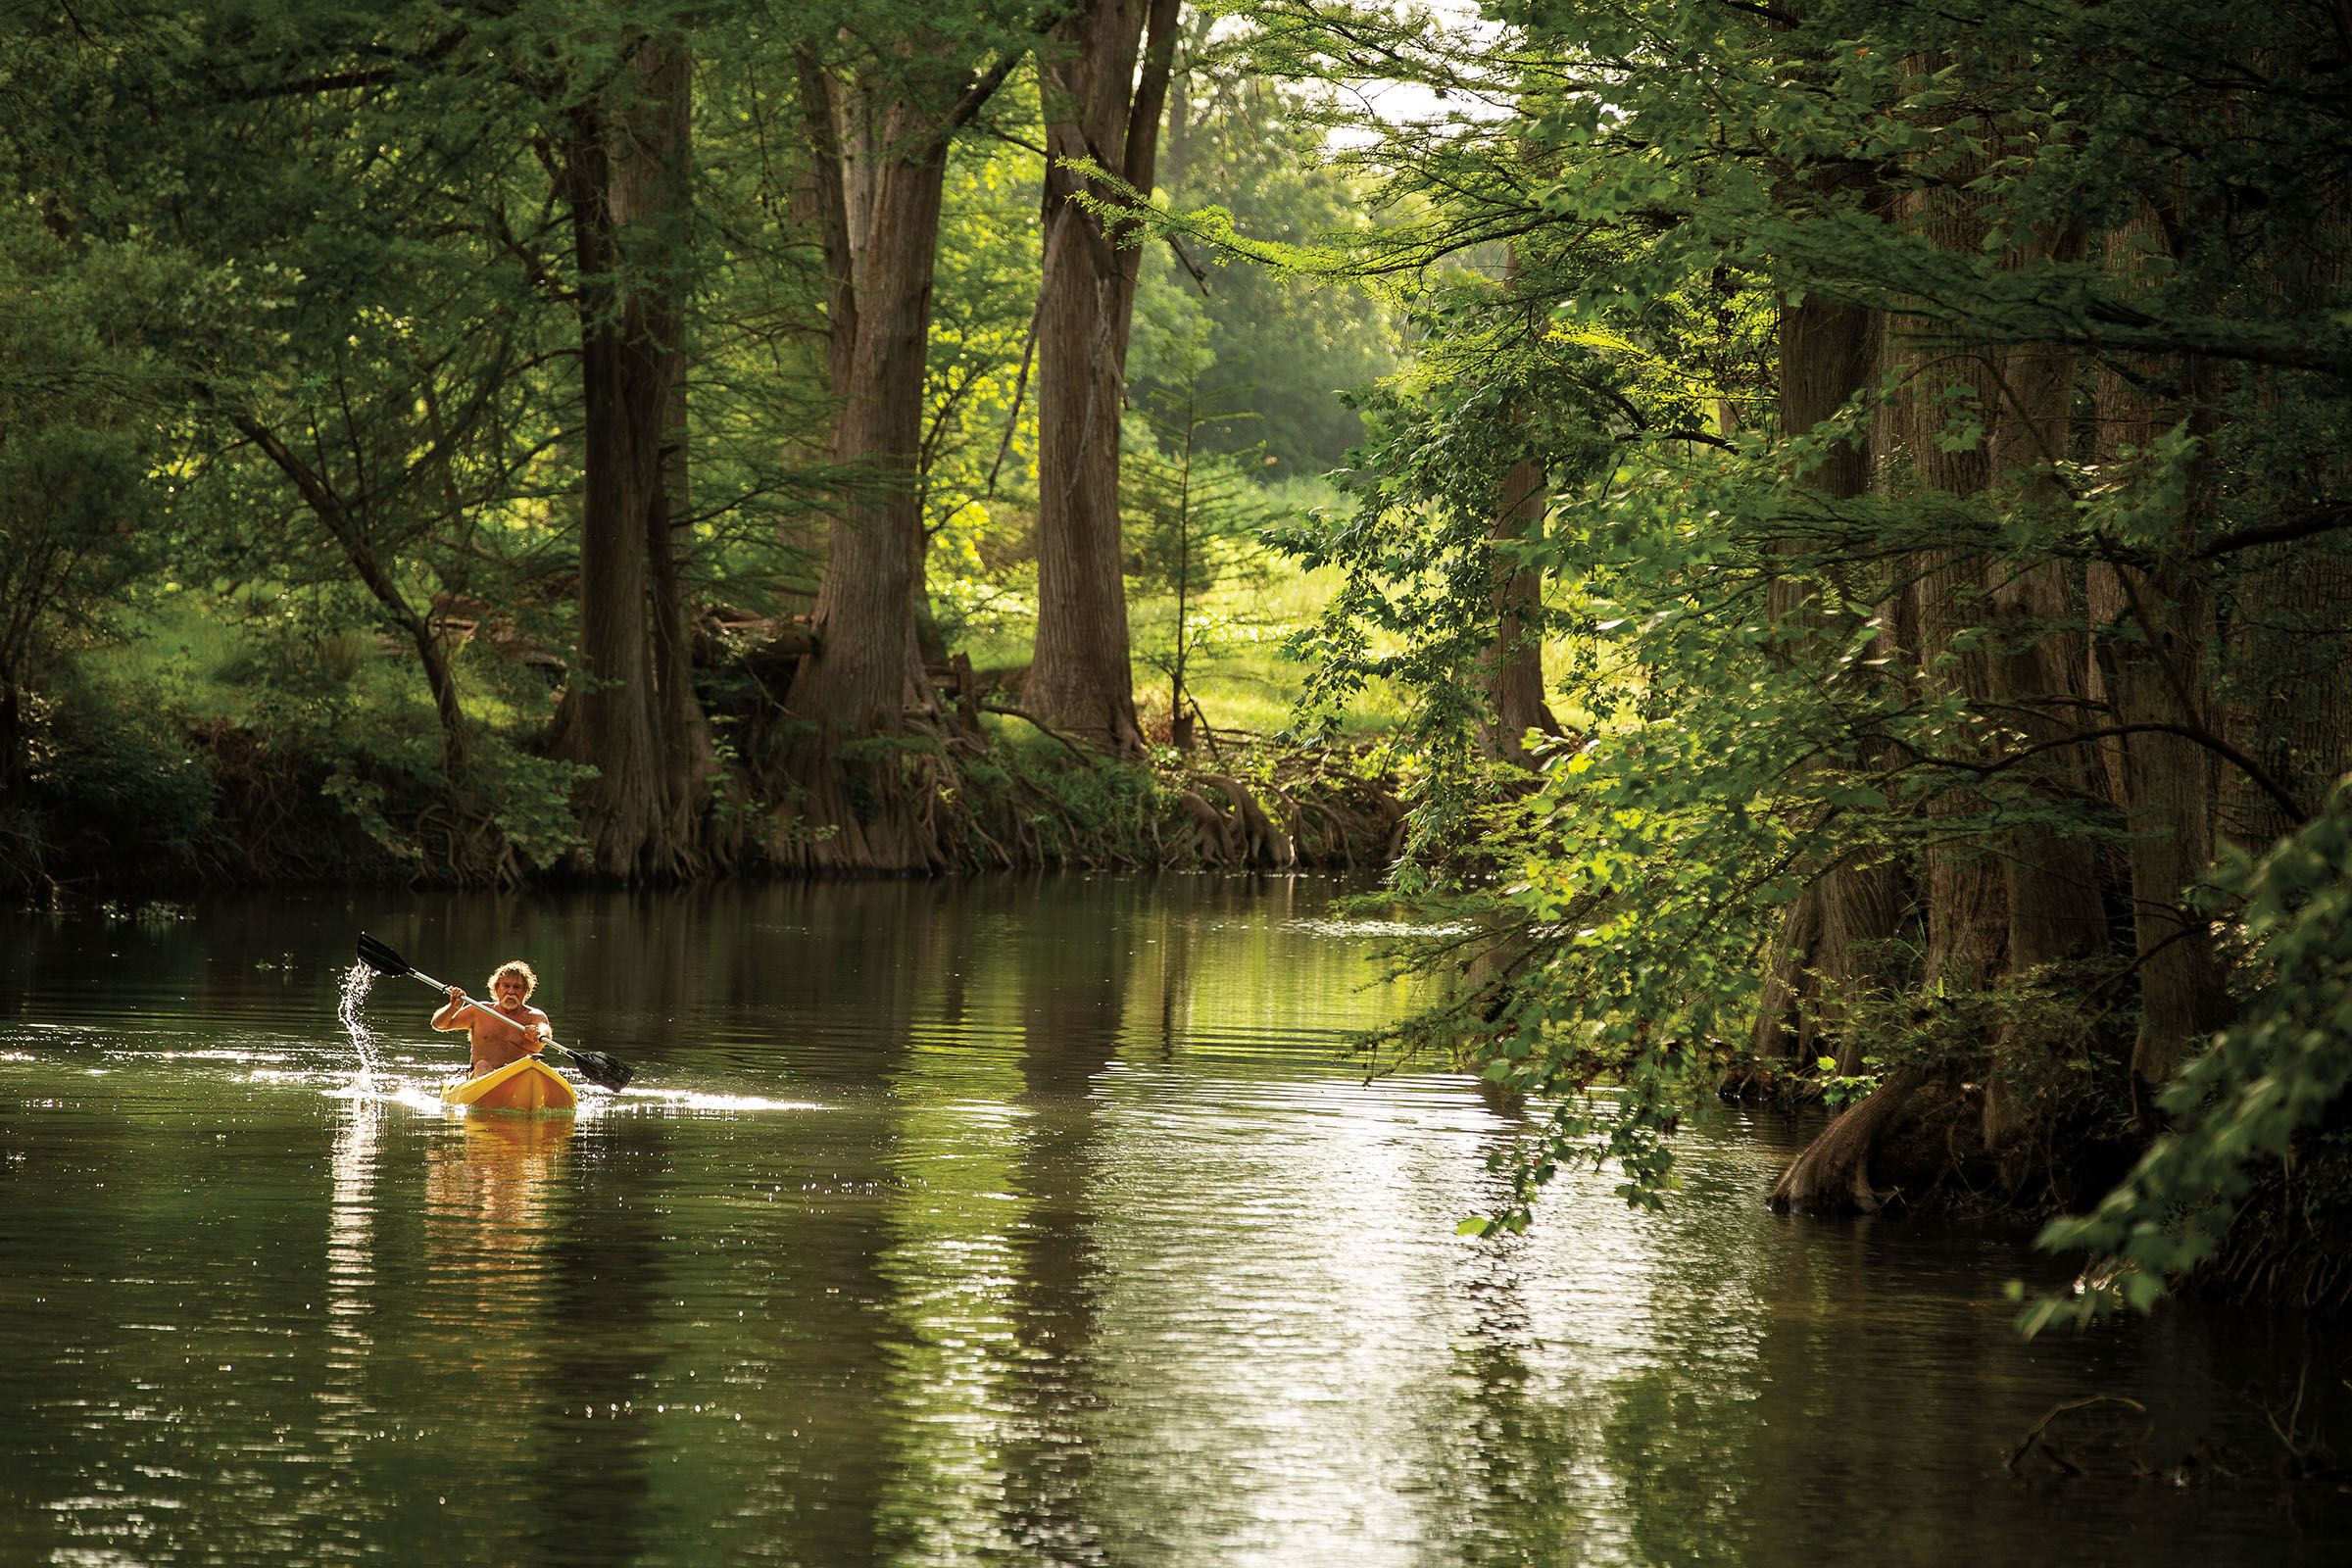 A shirtless man in a yellow kayak paddles down a lush green waterway